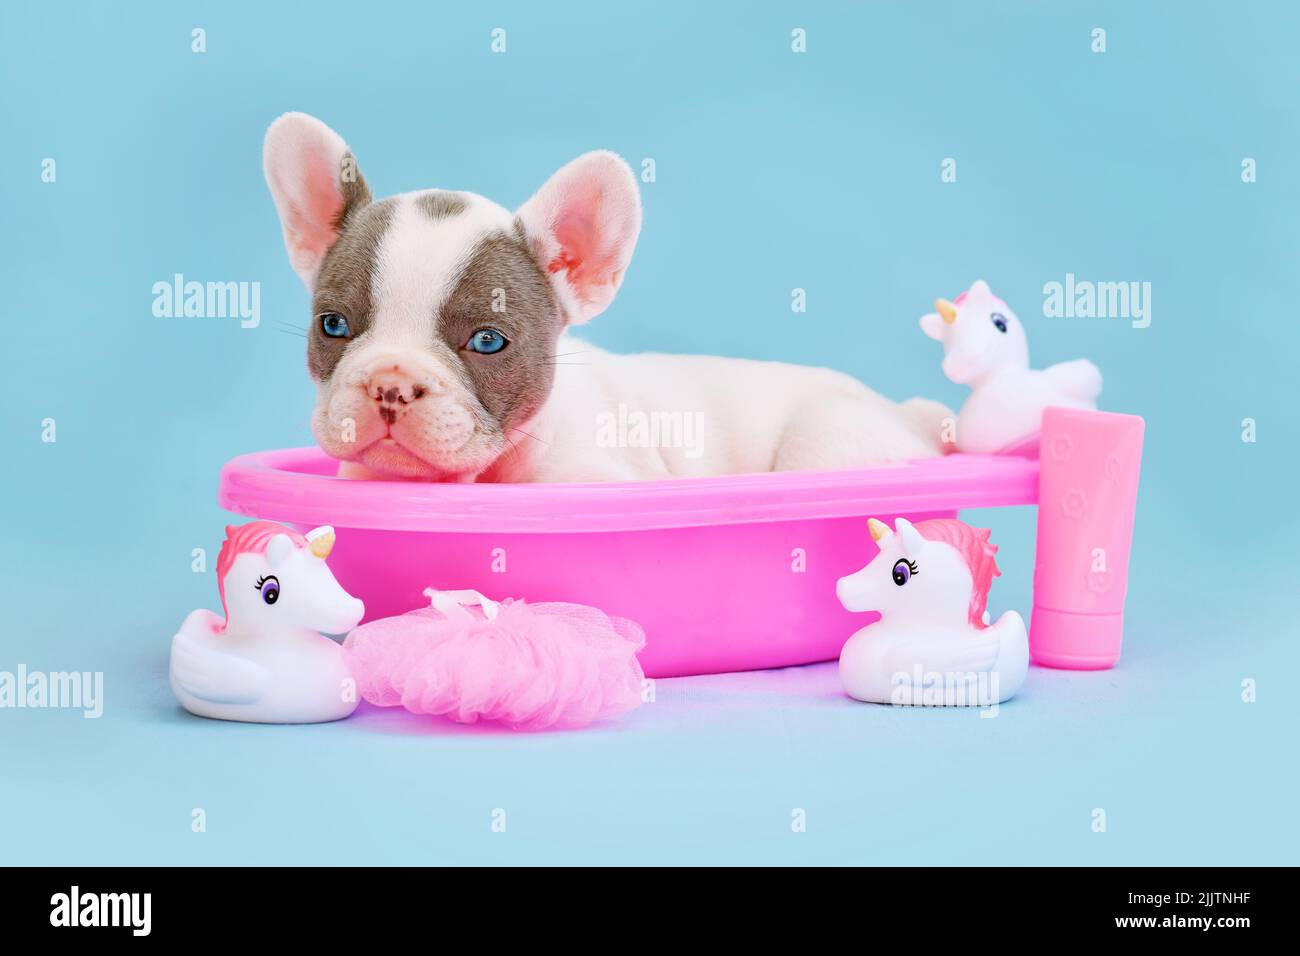 Isabella pied francés Bulldog perrito en bañera rosa con patos de goma sobre fondo azul Foto de stock